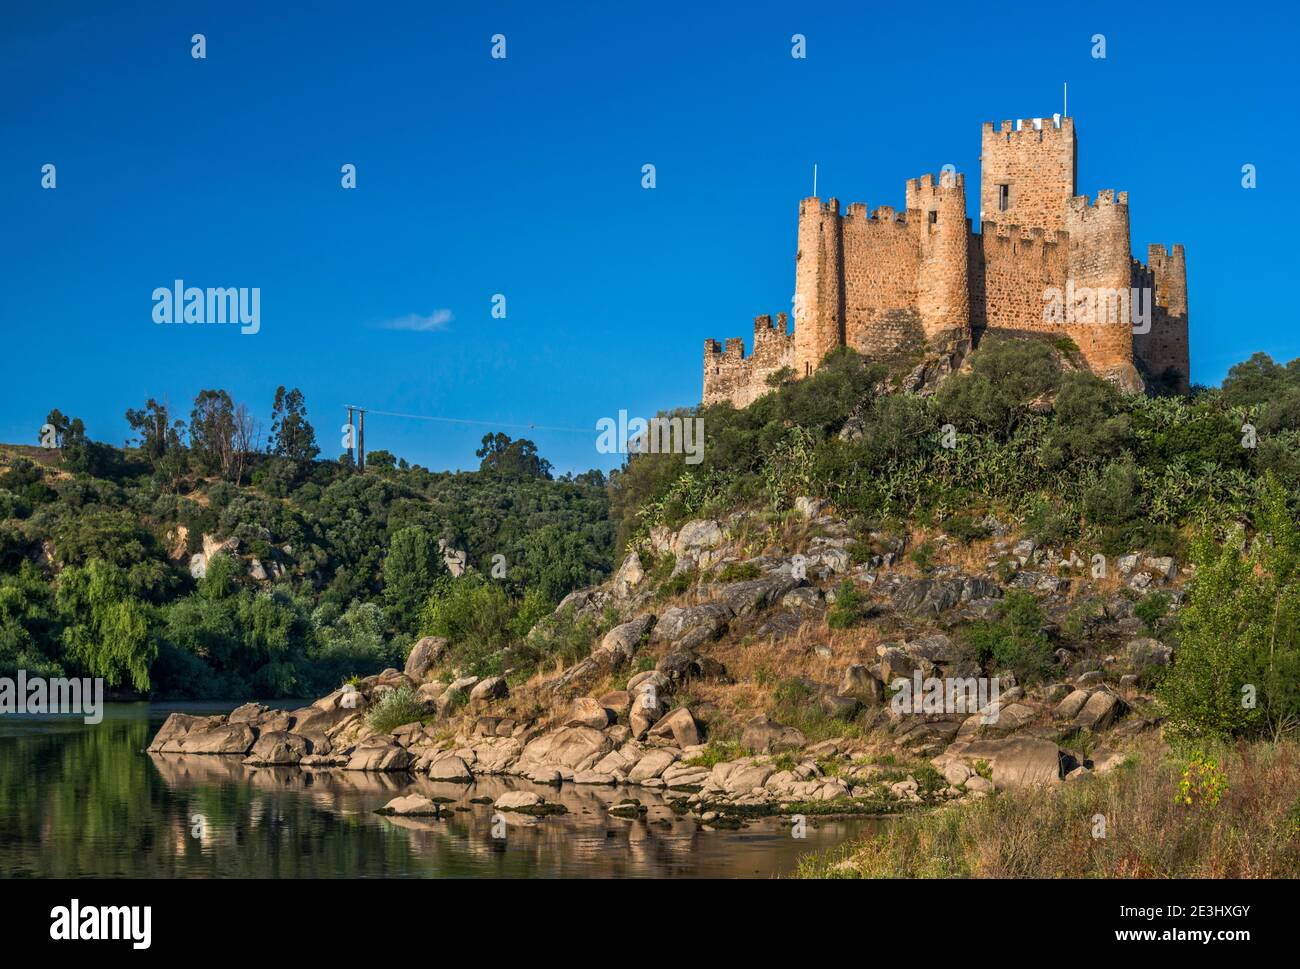 Castelo de Almourol, medieval castle over Tagus River (Rio Tejo), near Tomar, Centro region, Portugal Stock Photo